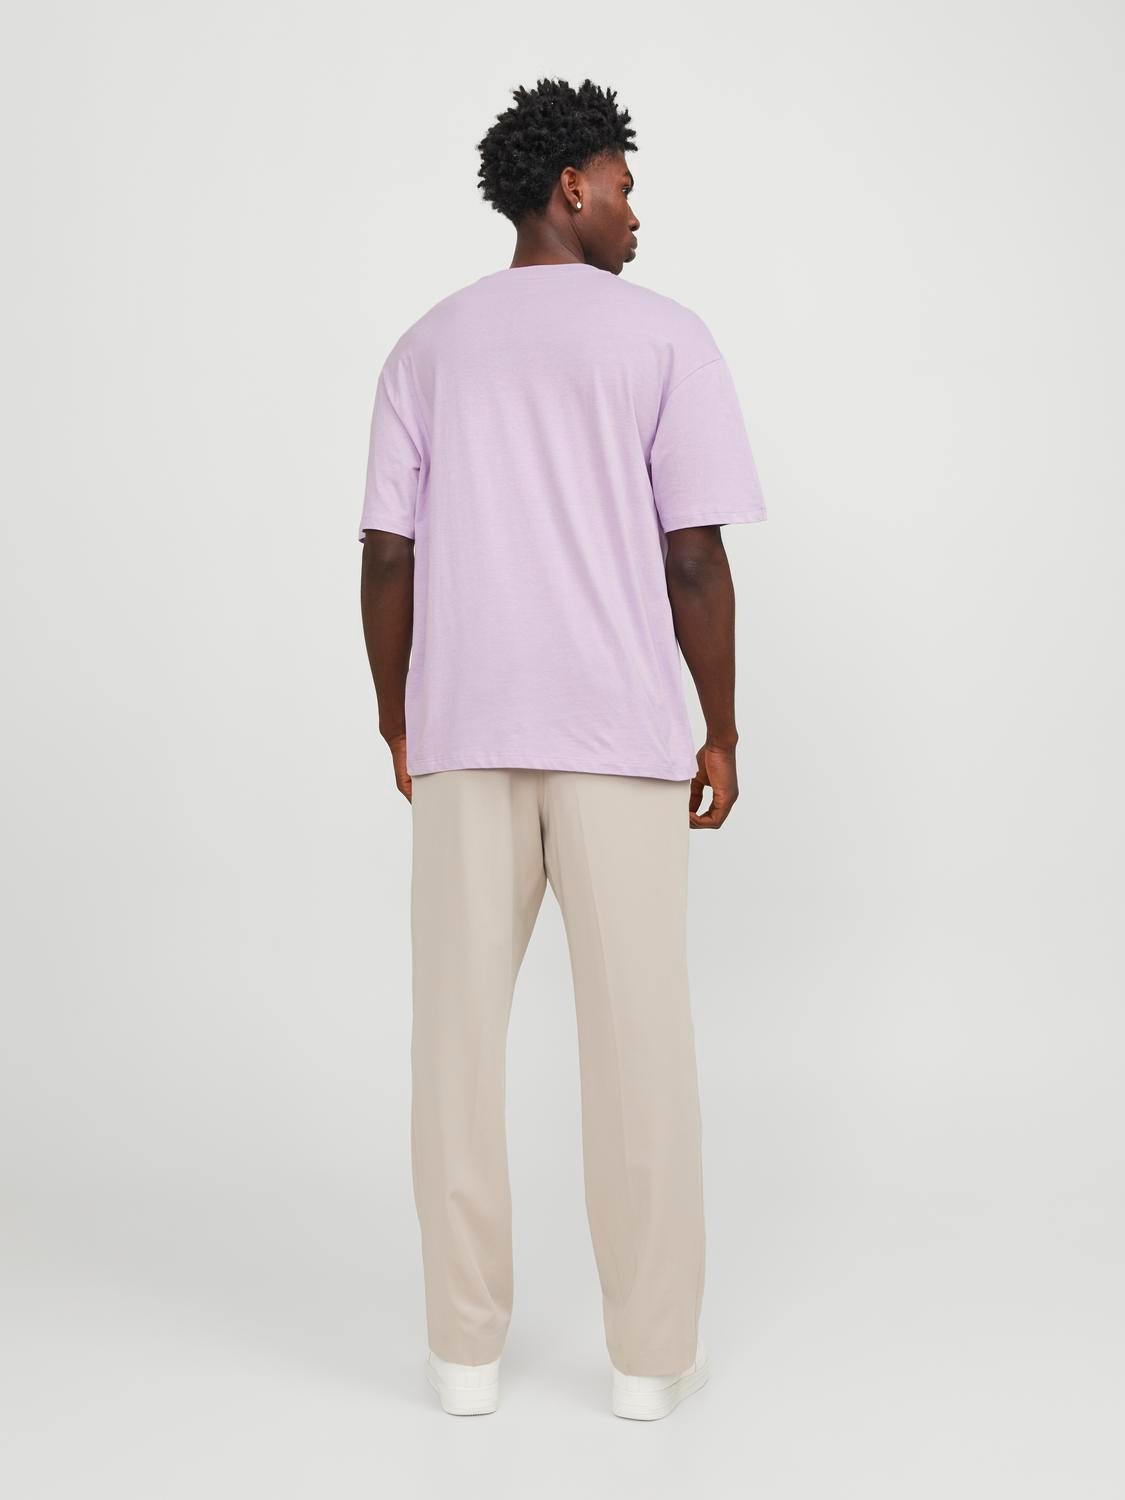 Jack & Jones Plain Crew neck T-shirt -Purple Rose - 12249319